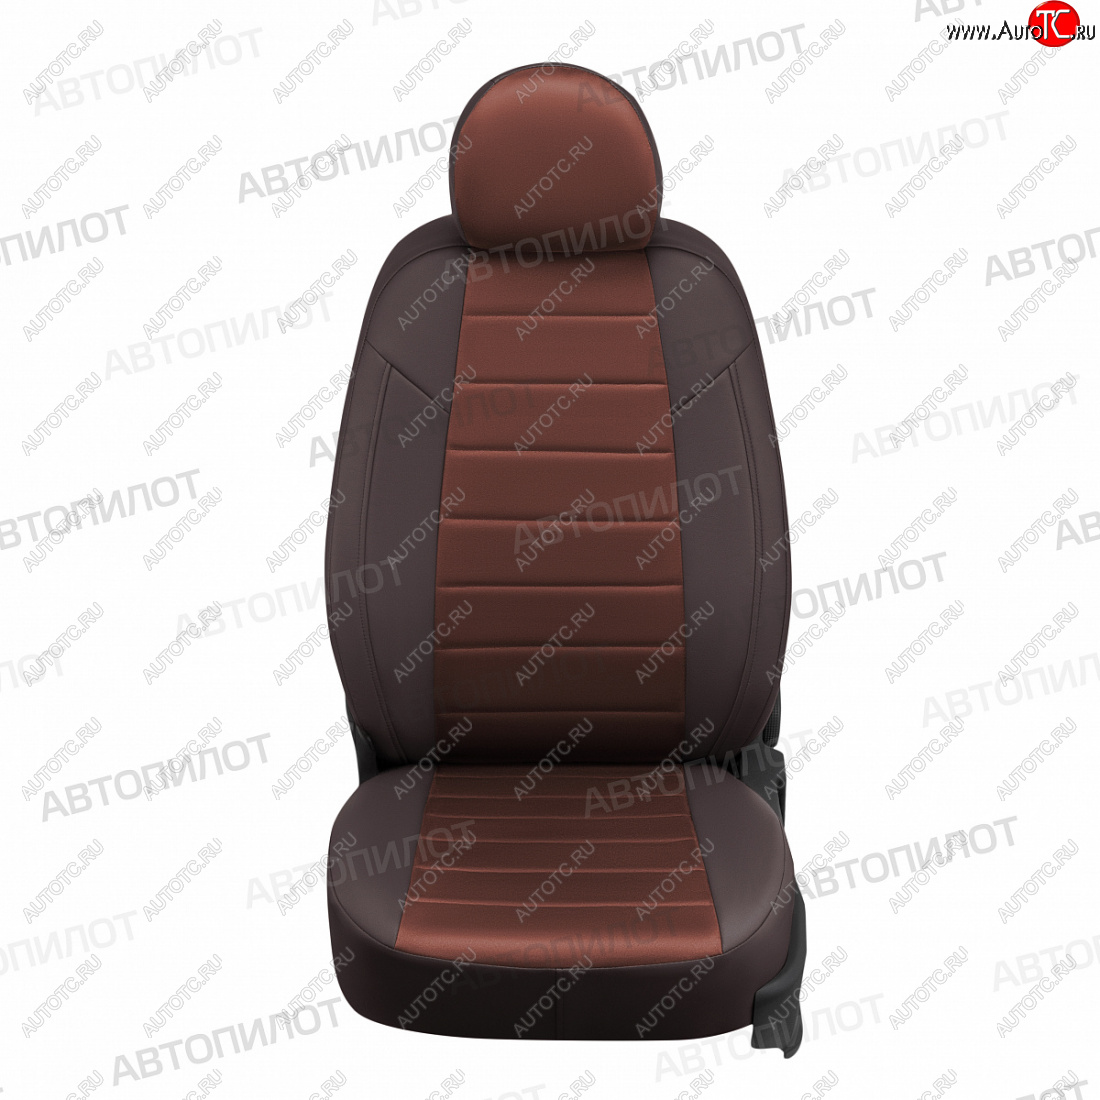 13 449 р. Чехлы сидений (экокожа/алькантара) Автопилот  KIA Picanto ( 2 TA хэтчбэк 5 дв.,  2 TA хэтчбэк 3 дв.) (2011-2017) (шоколад)